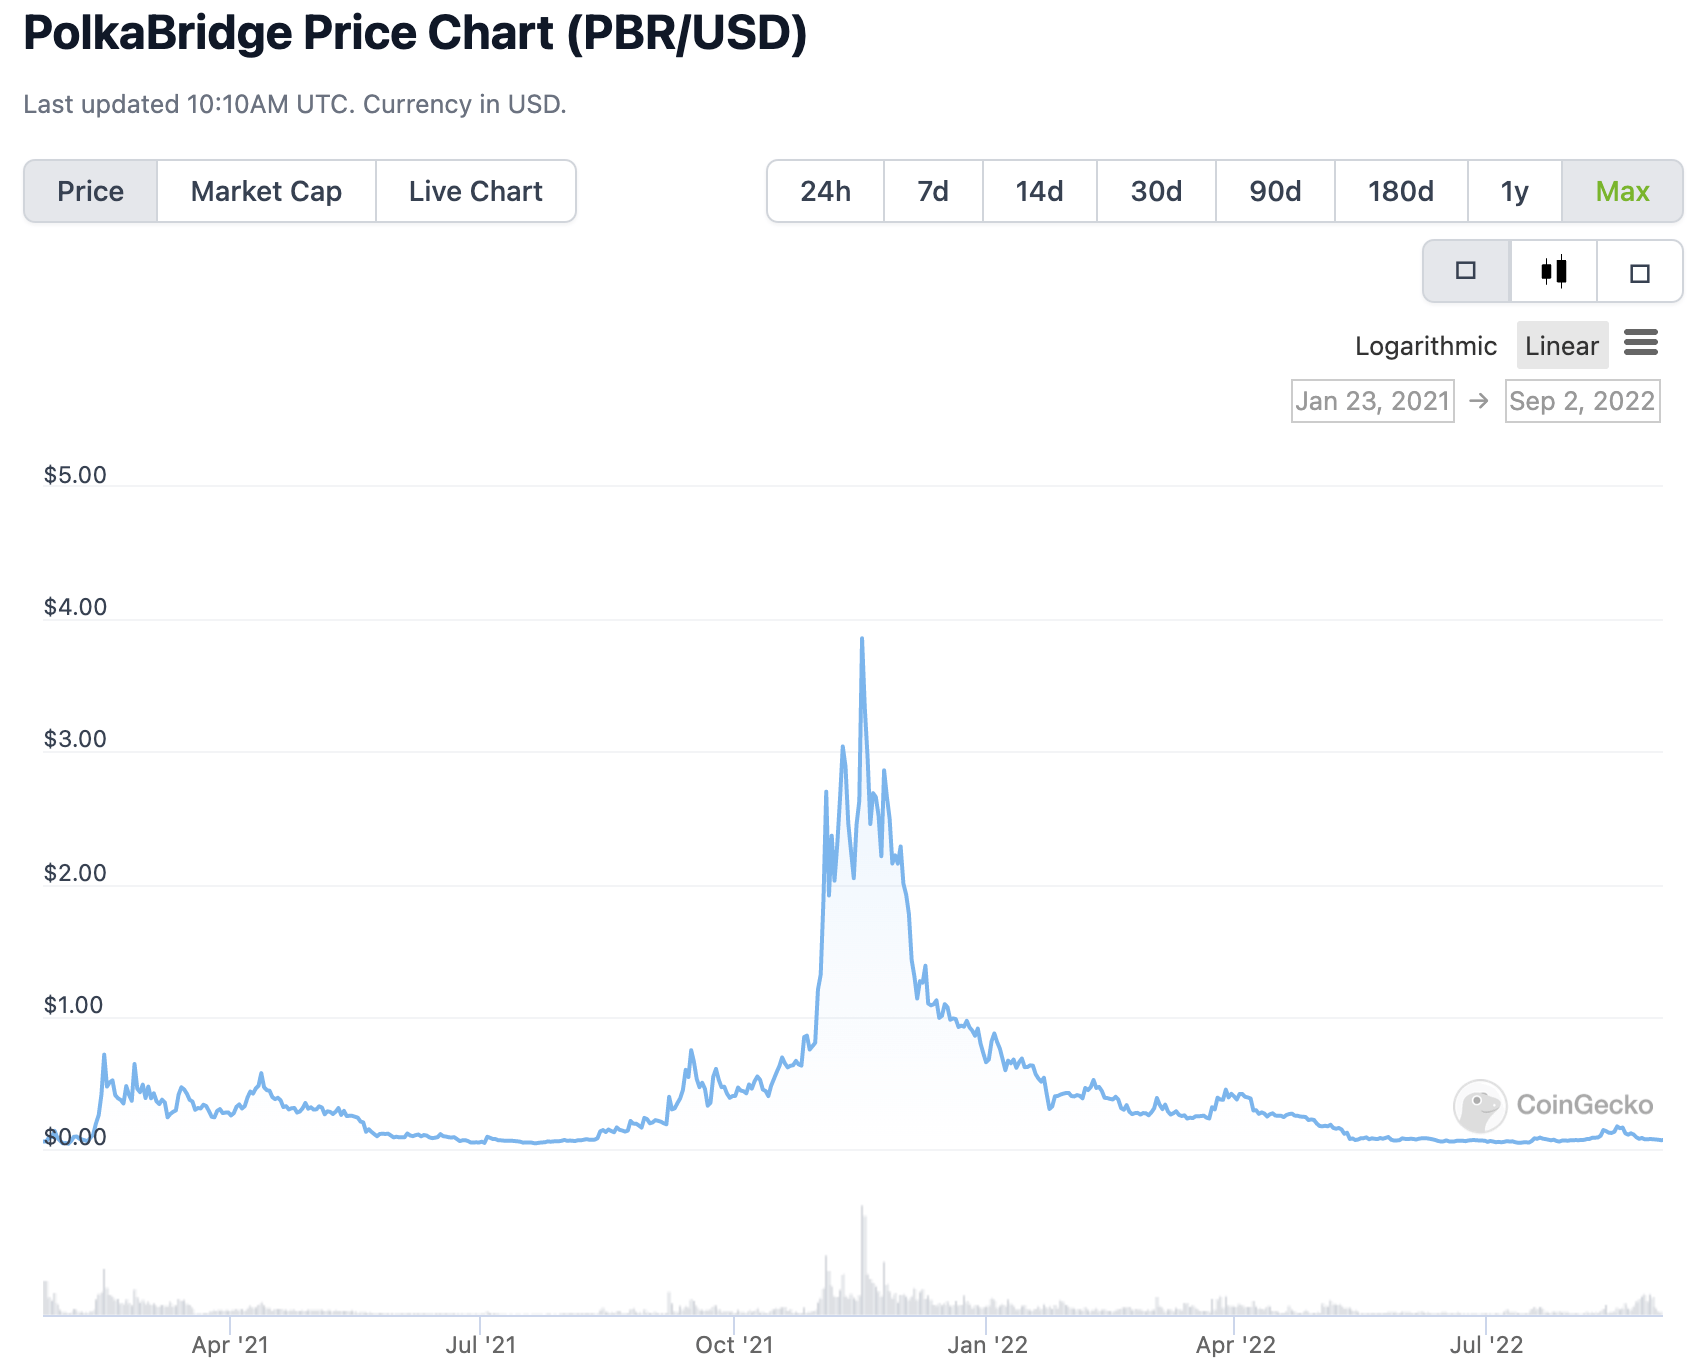 PolkaBridge price chart from